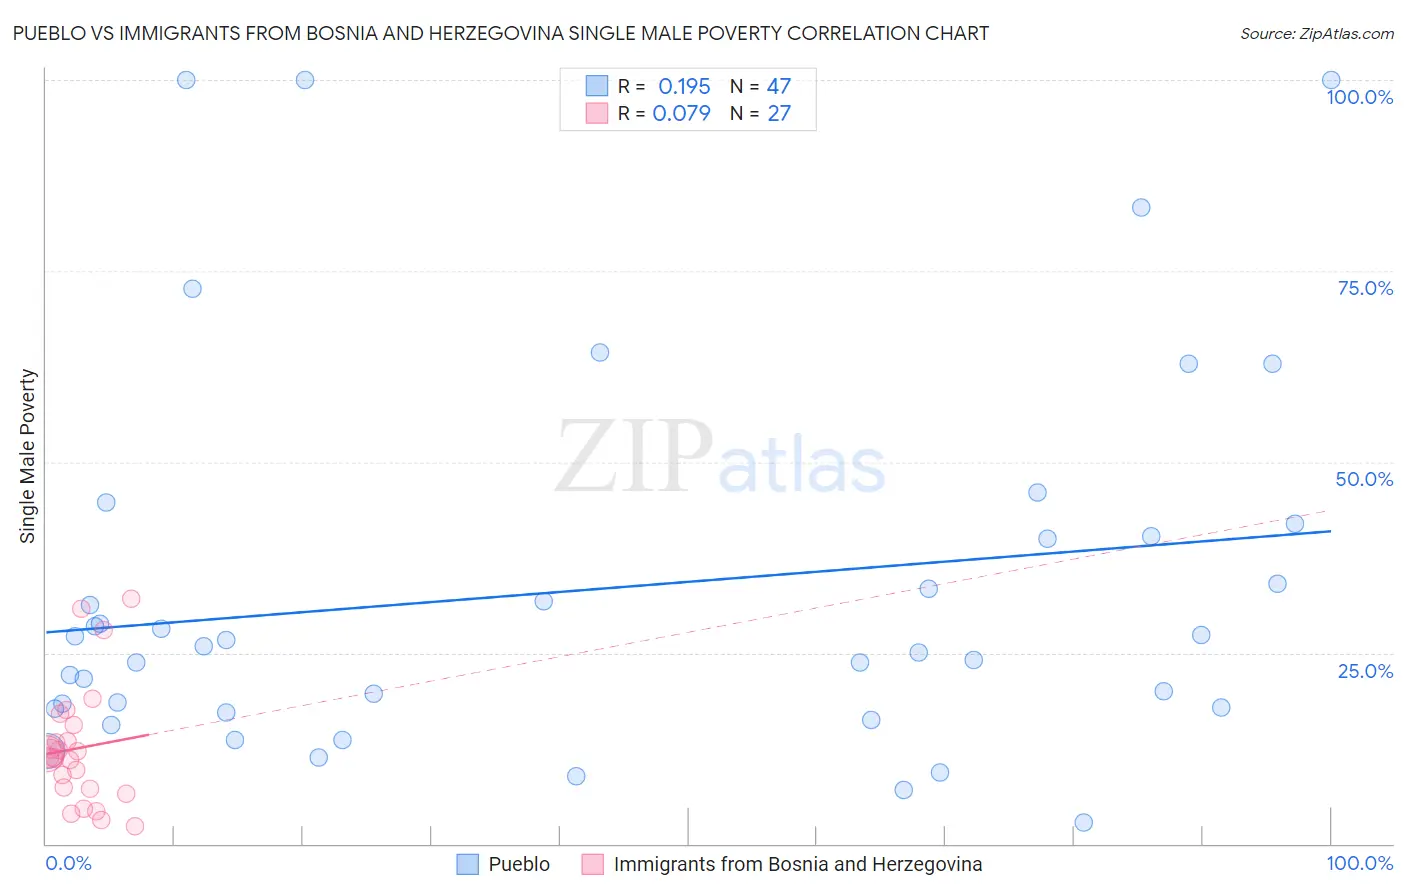 Pueblo vs Immigrants from Bosnia and Herzegovina Single Male Poverty